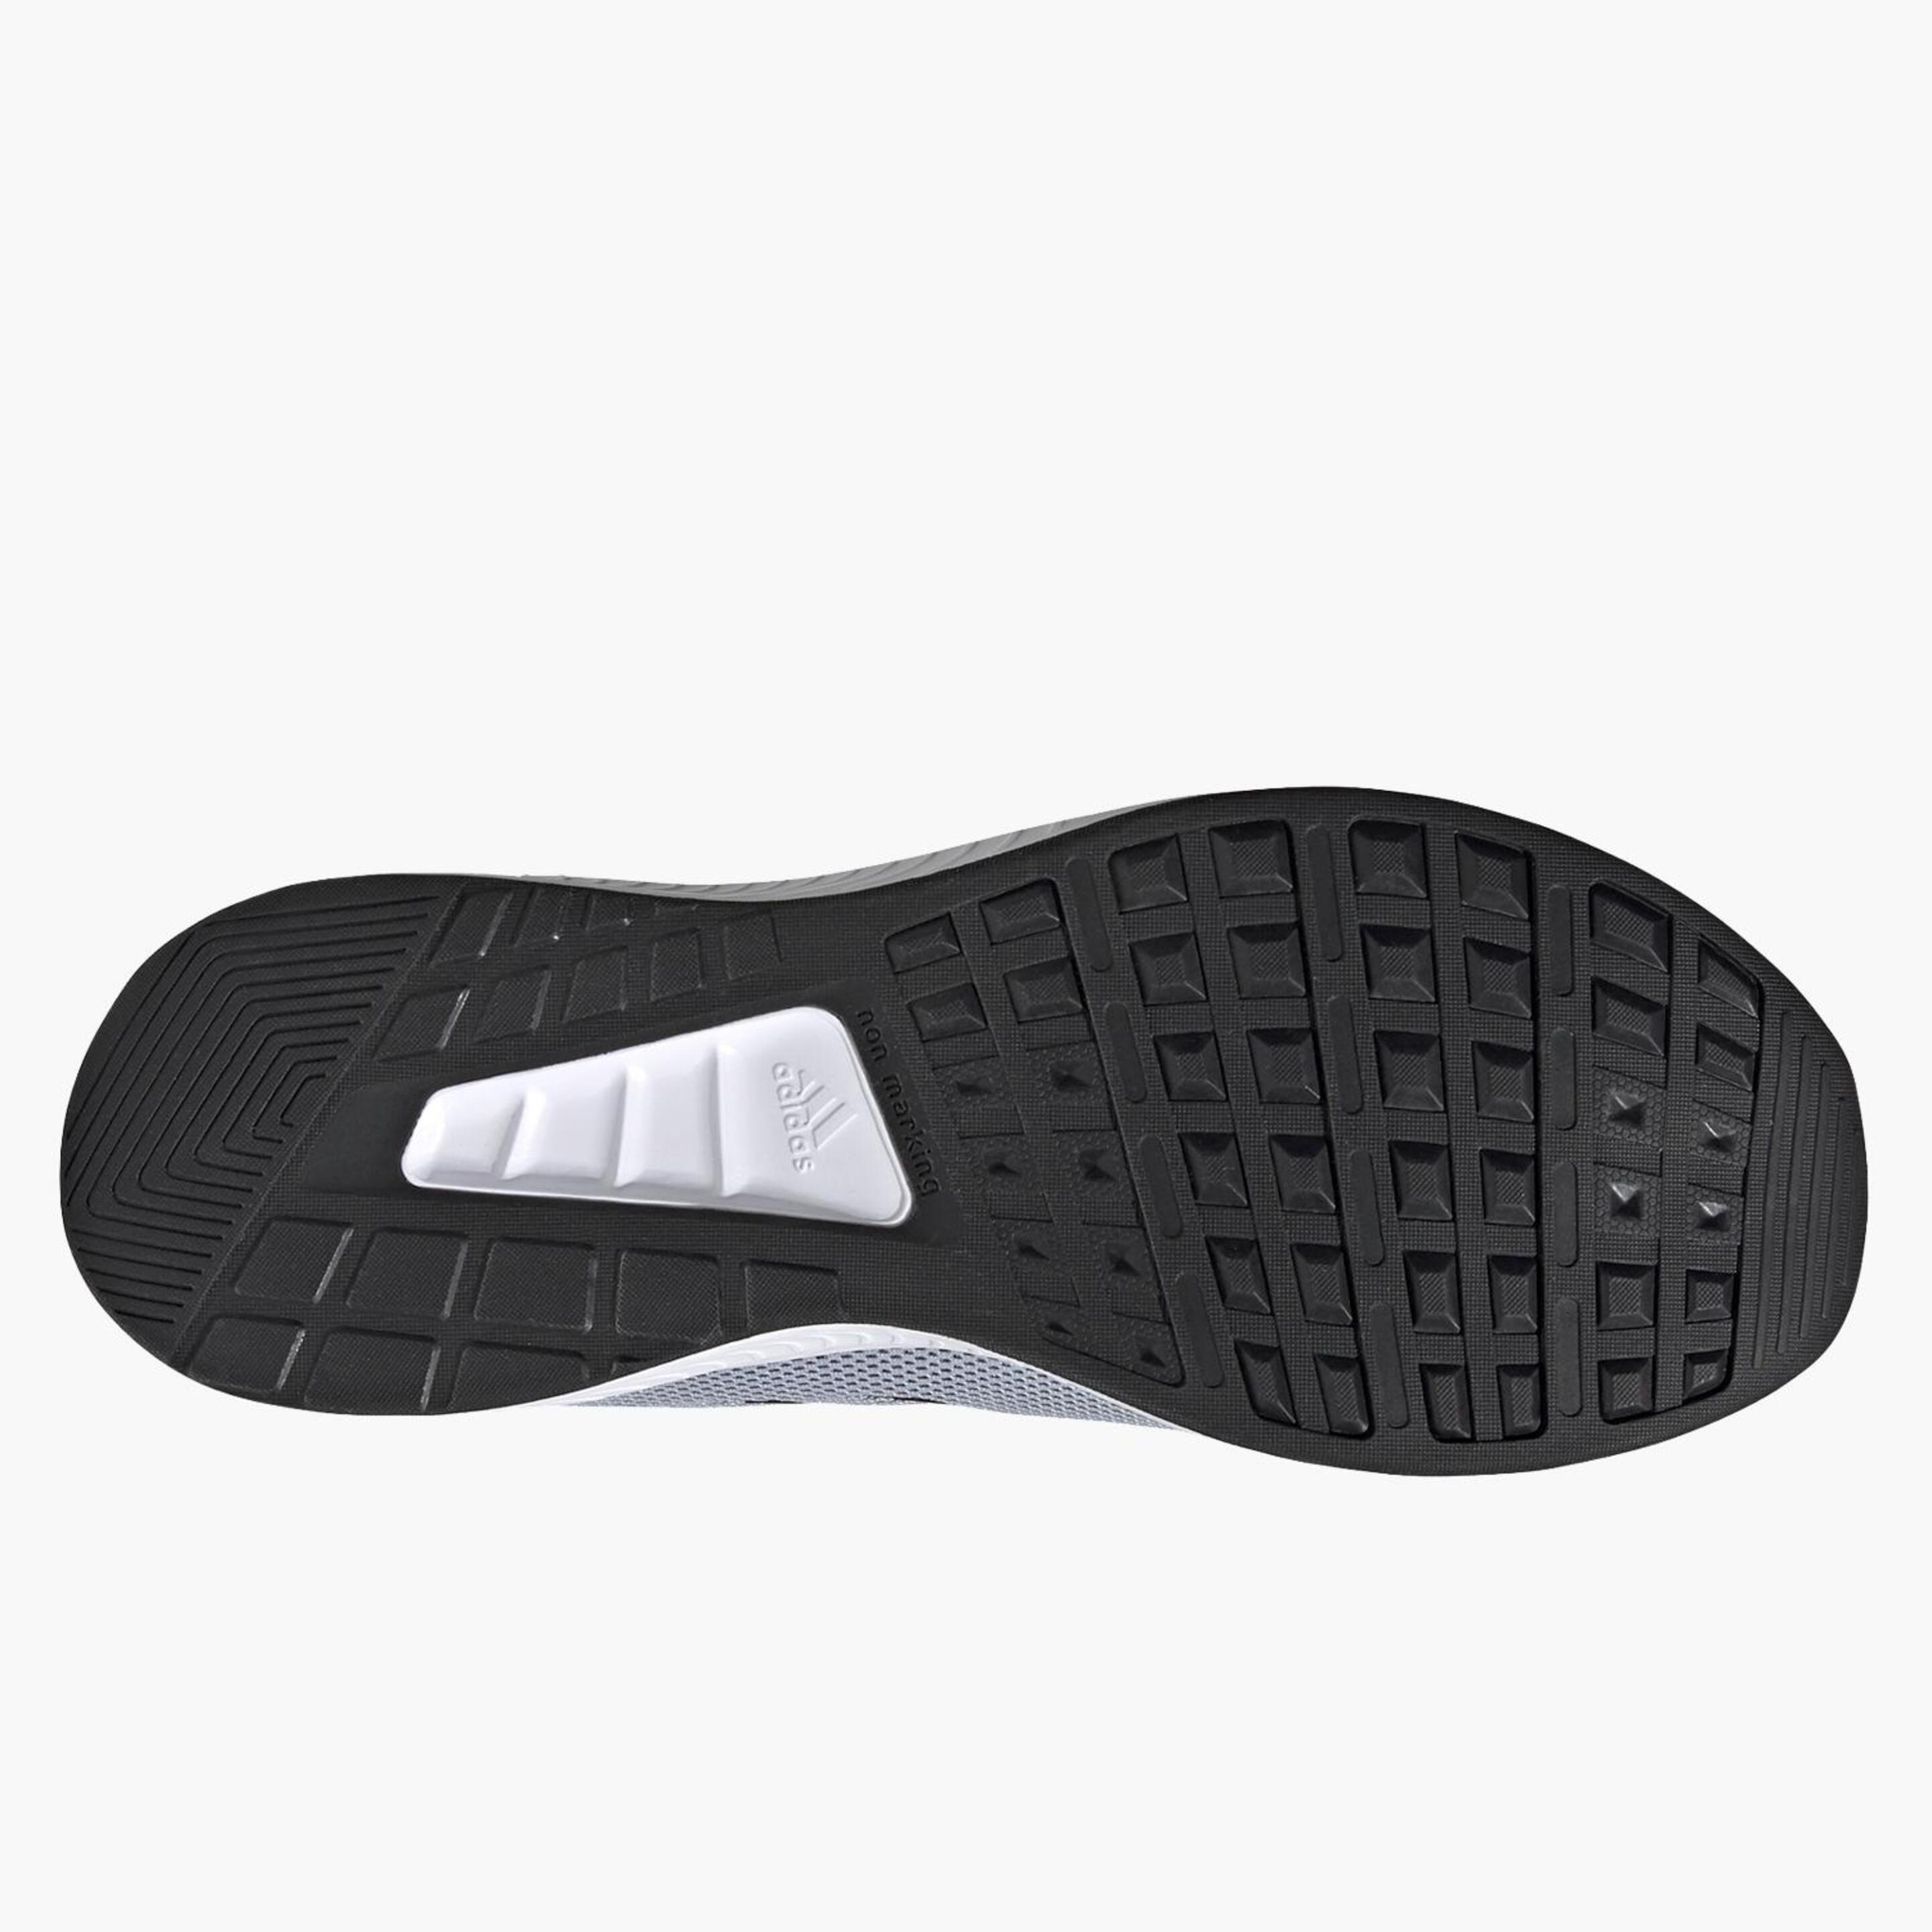 adidas Runfalcon 2.0 - Grises - Zapatillas Running Hombre